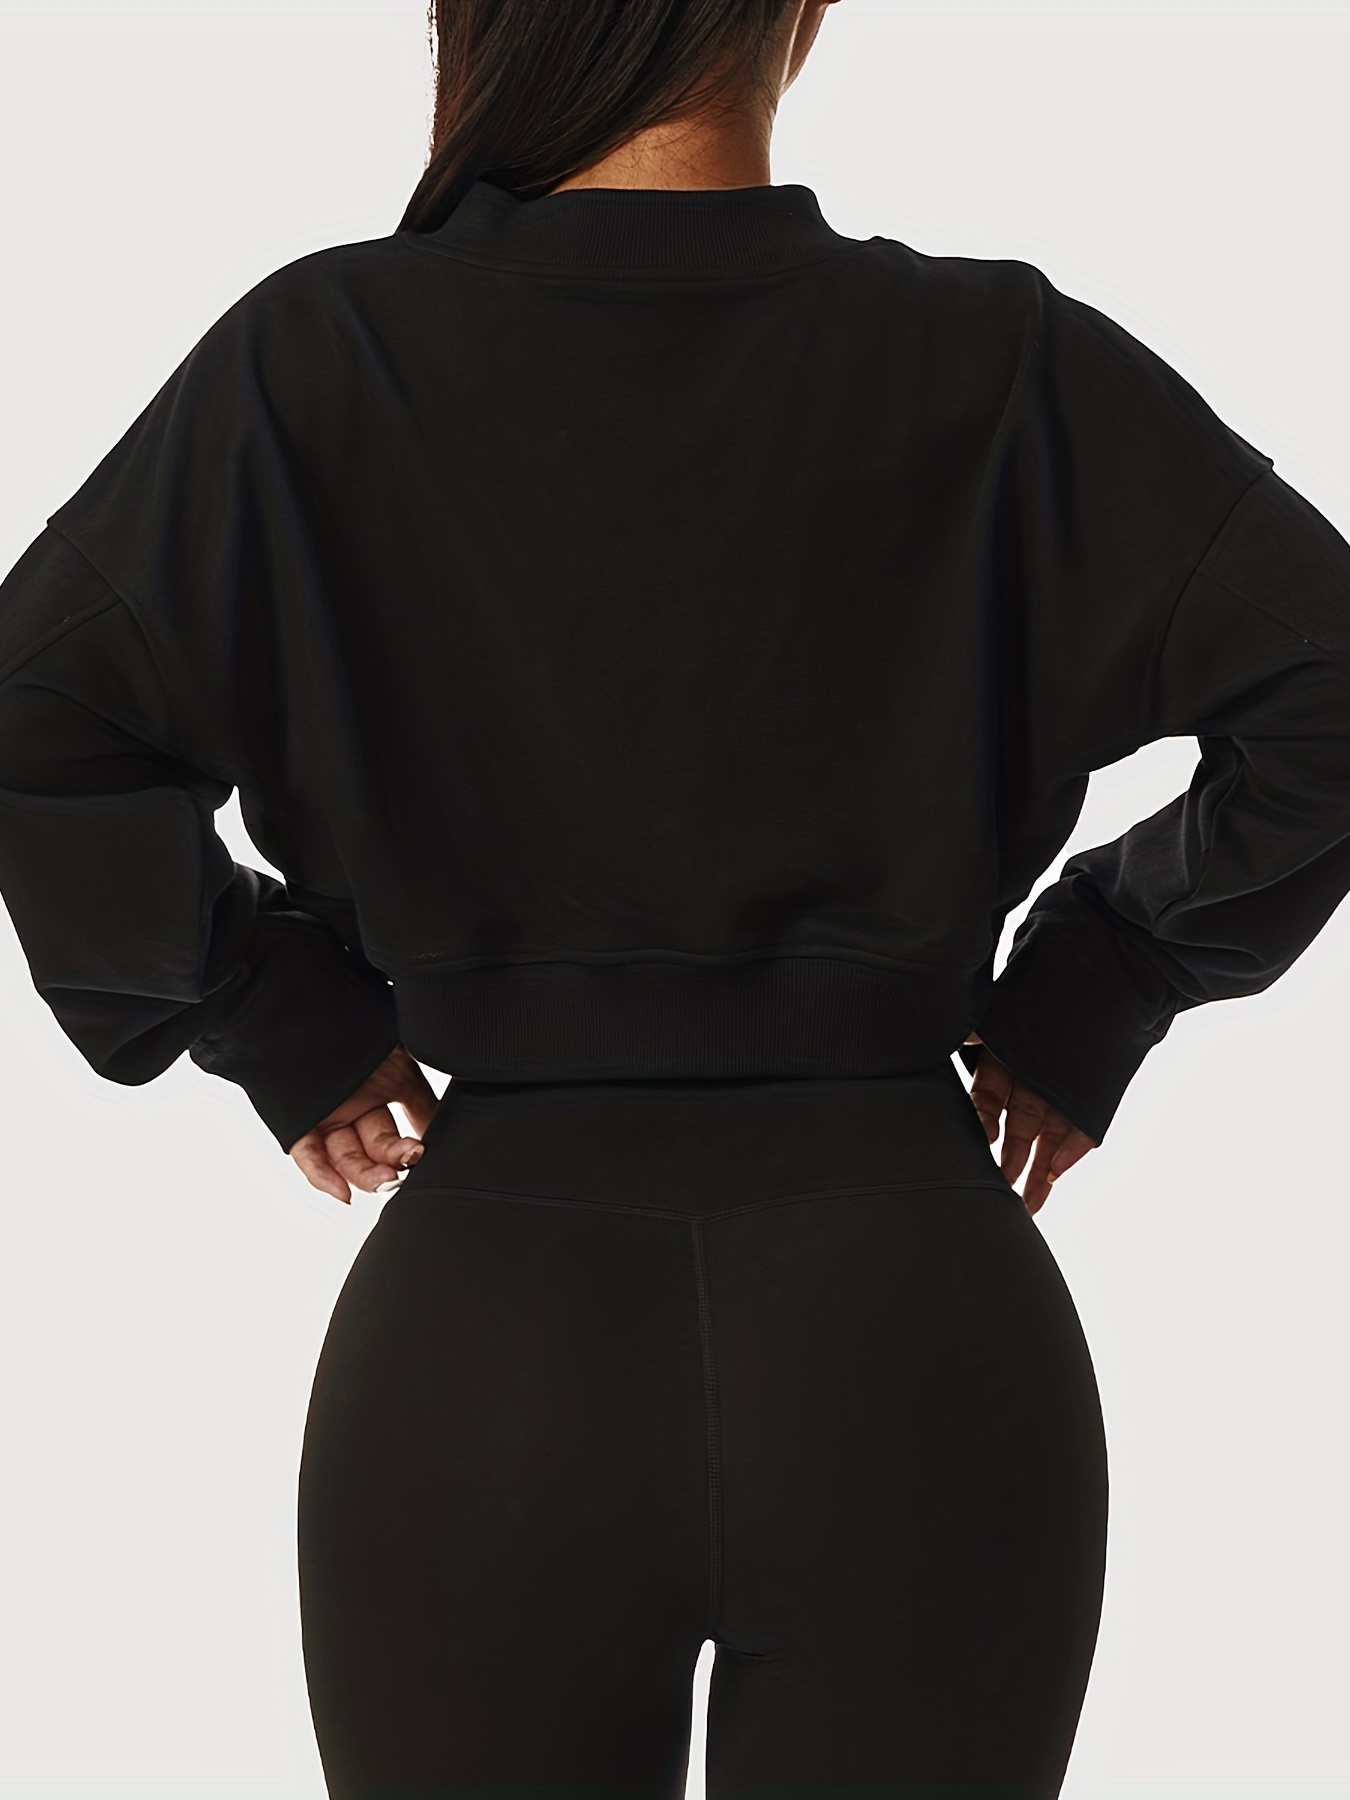 Yyeselk Womens Cropped Sweatshirts Fashion Half Zip V-Neck Long